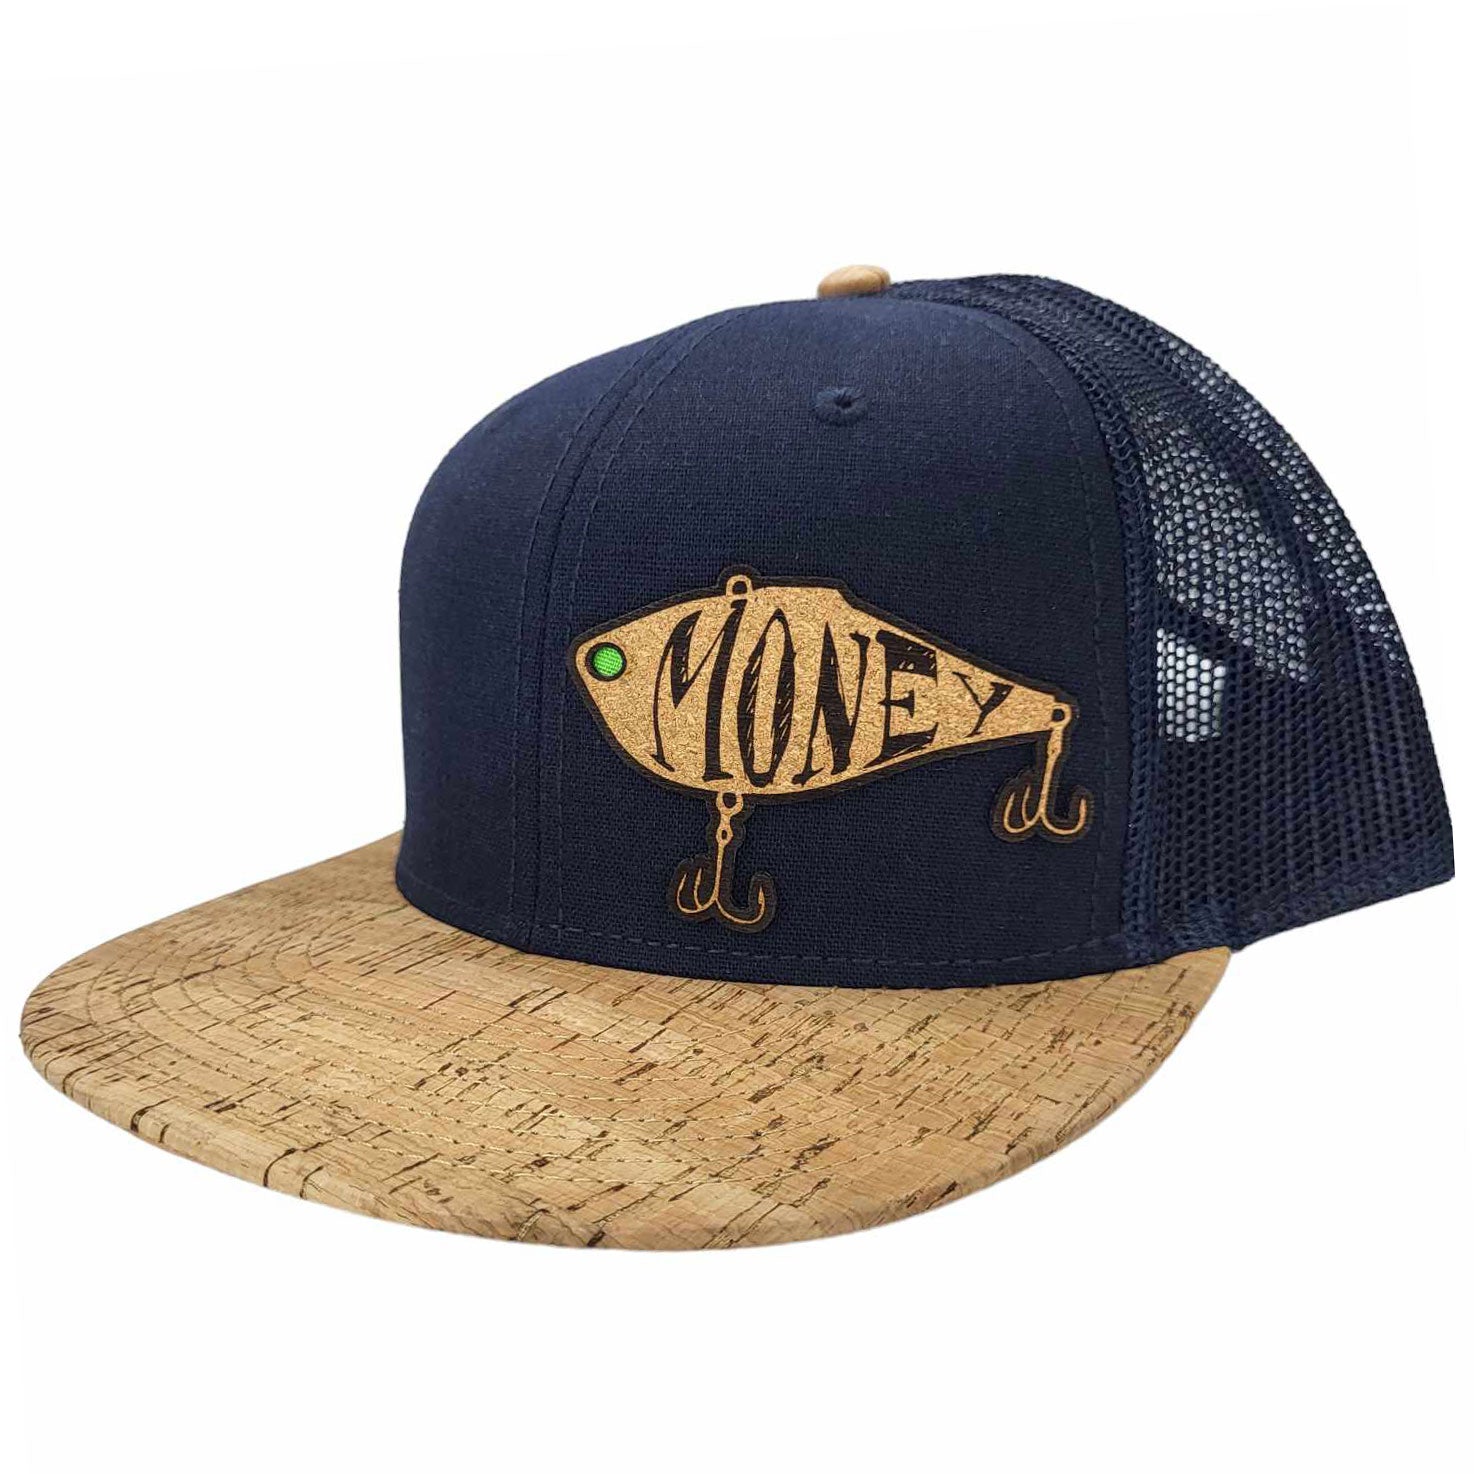 Money Fishing Cork Hat